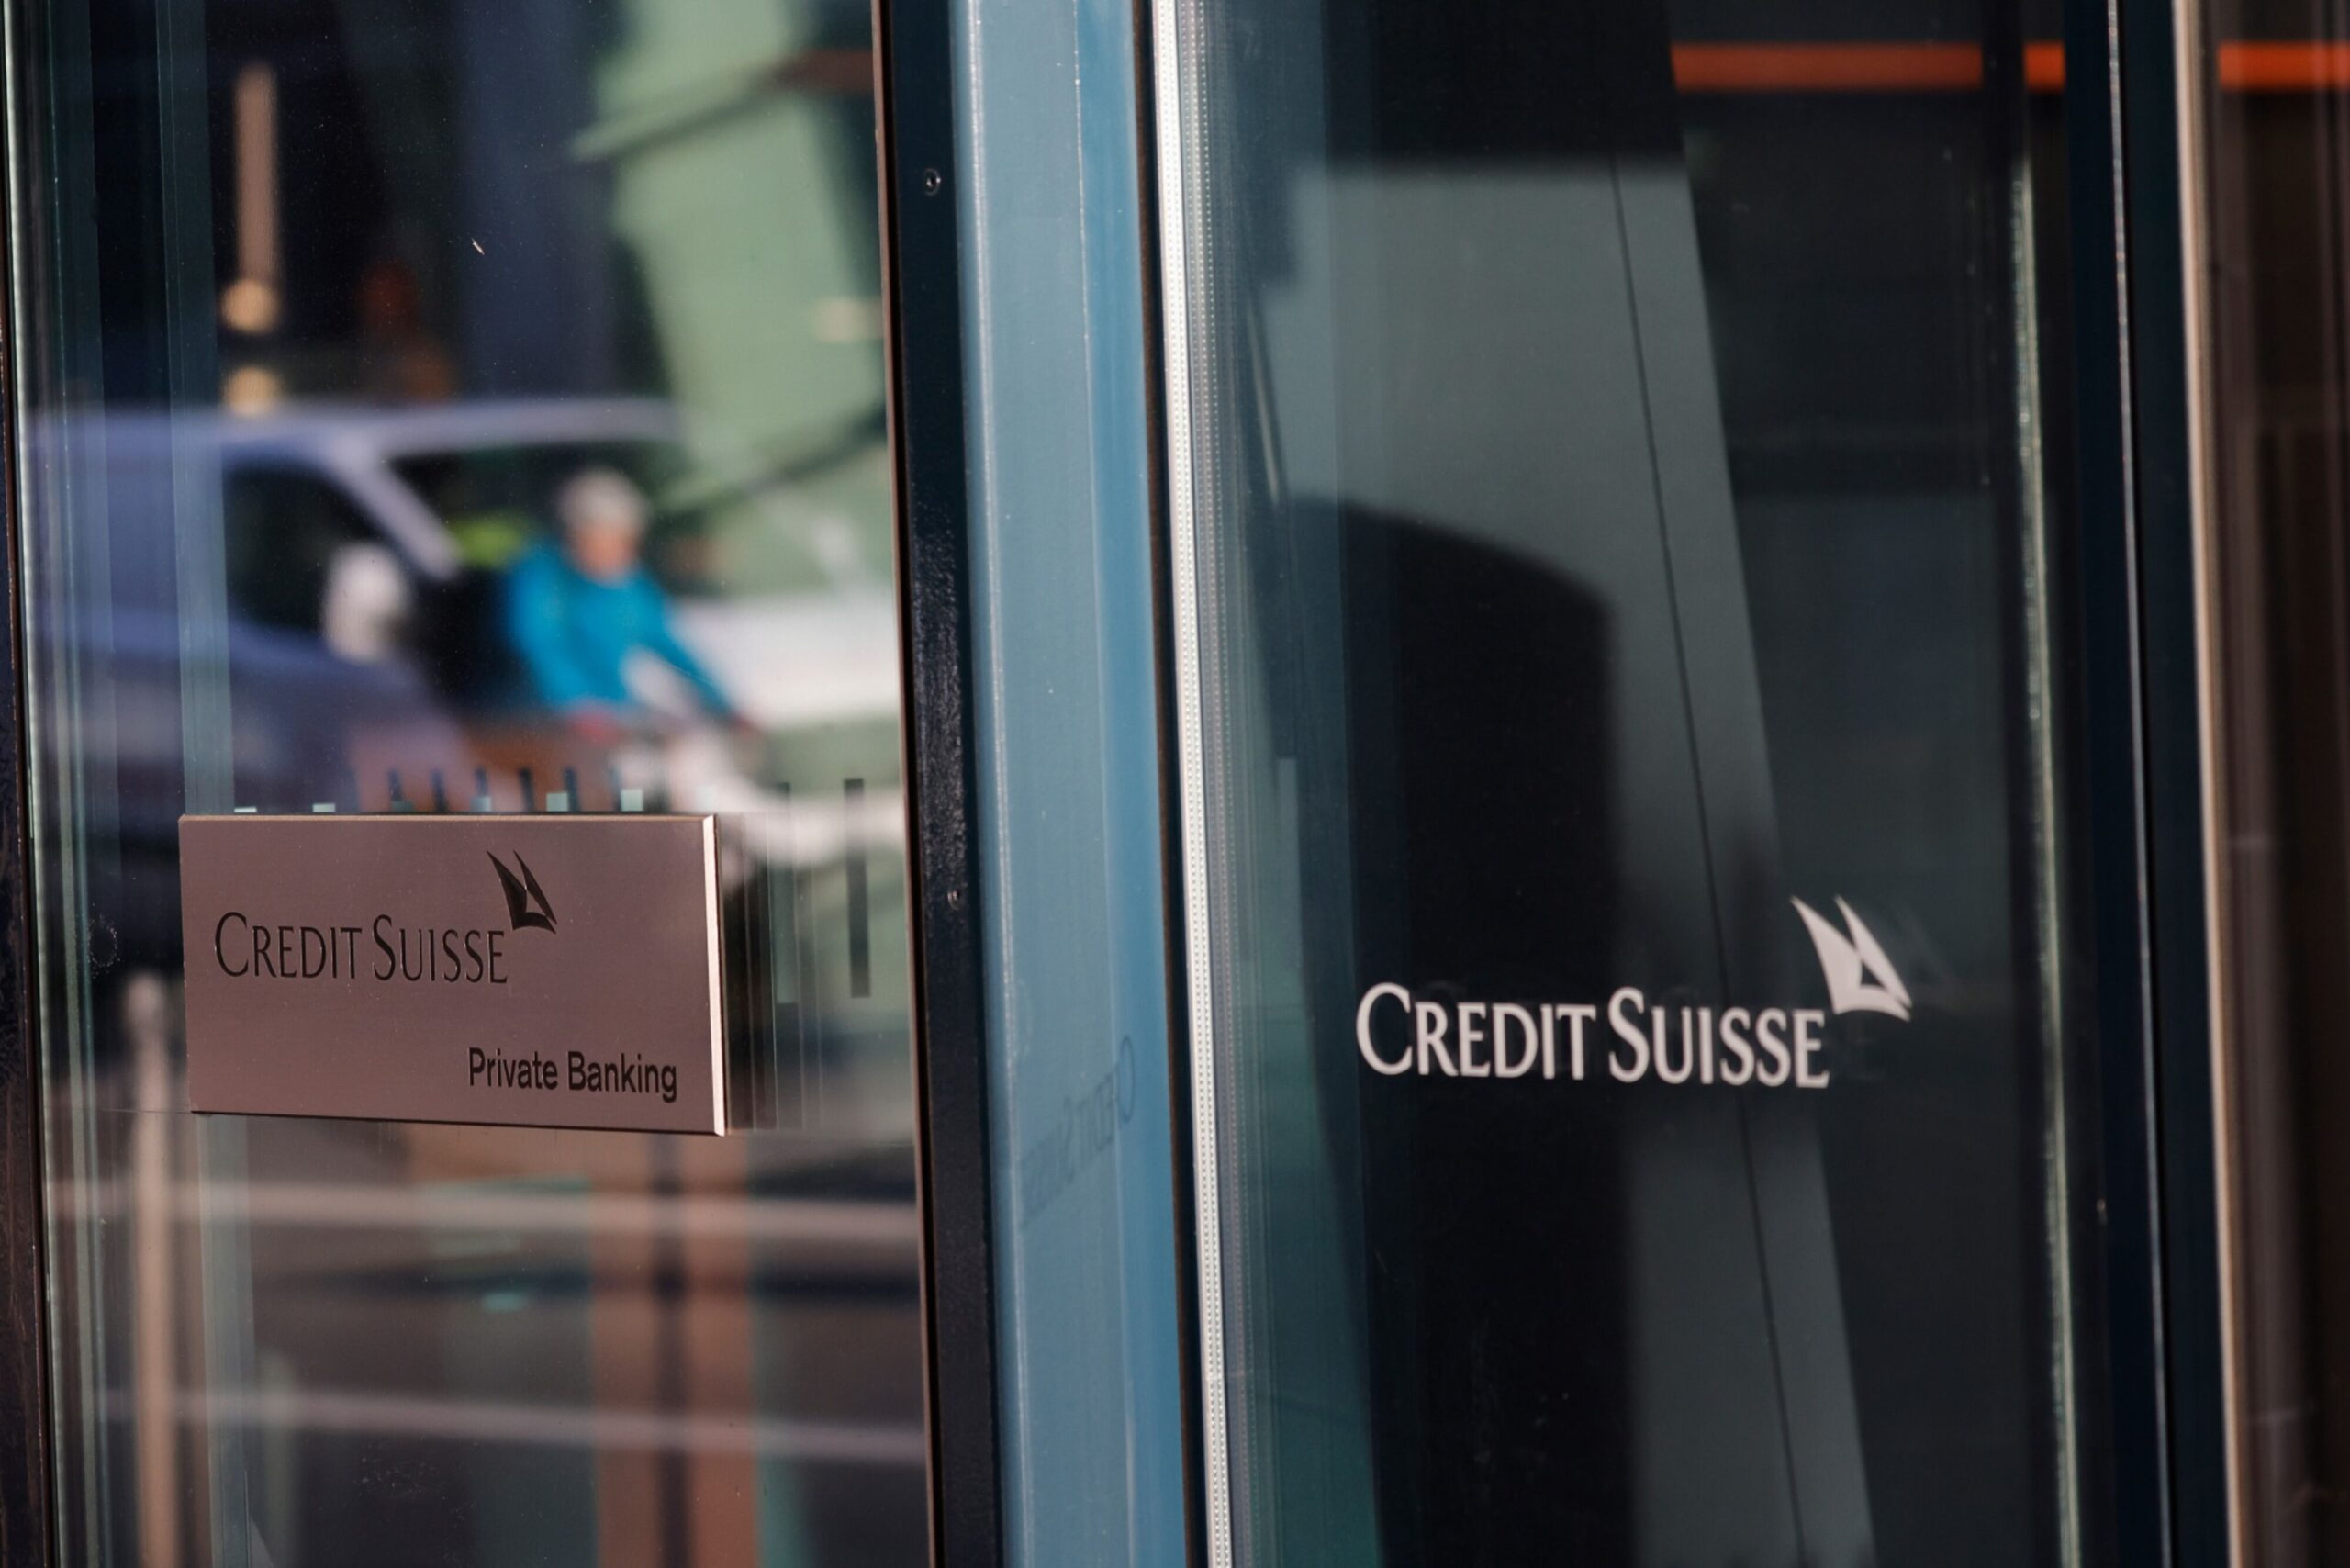 Credit Suisse Bondholders Who Lost $1.7B in UBS Deal File Lawsuits